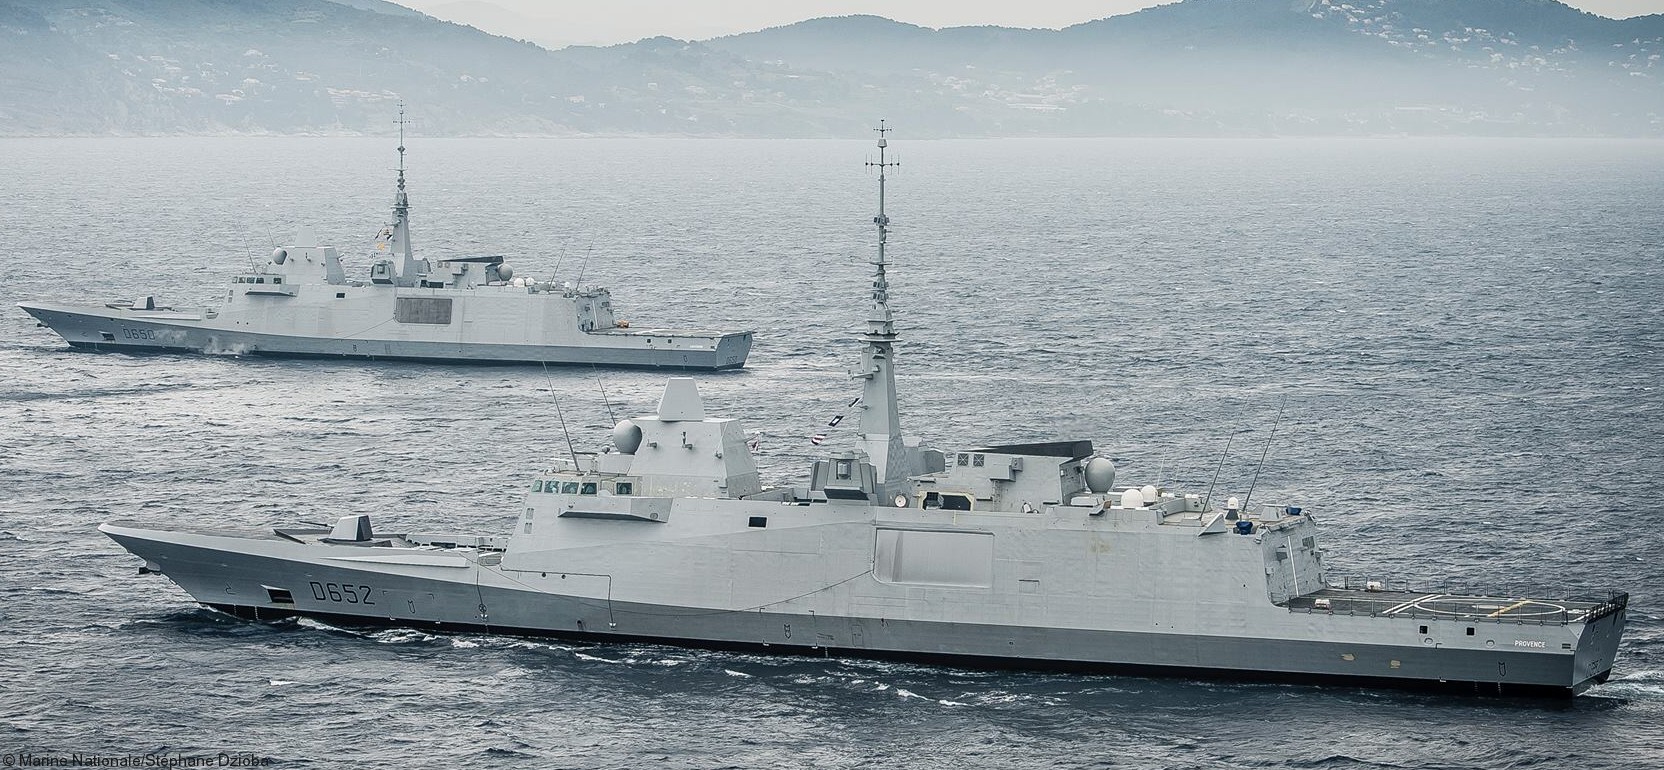 d-652 fs provence fremm aquitaine class frigate fregate multi purpose french navy marine nationale 09